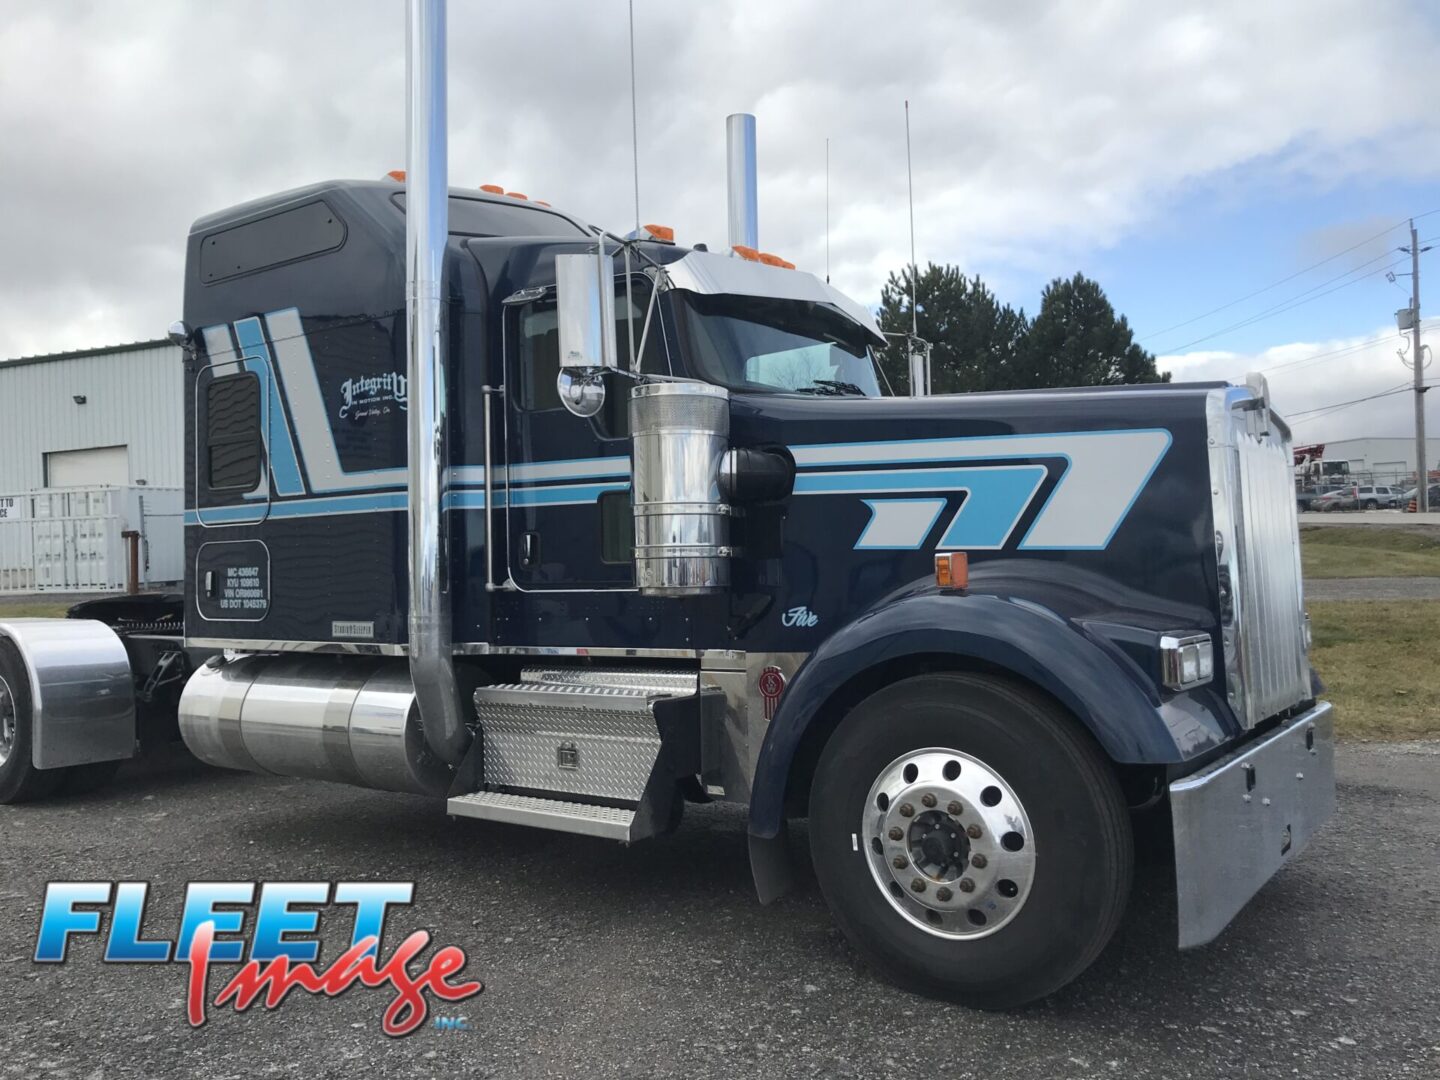 Integrity blue truck